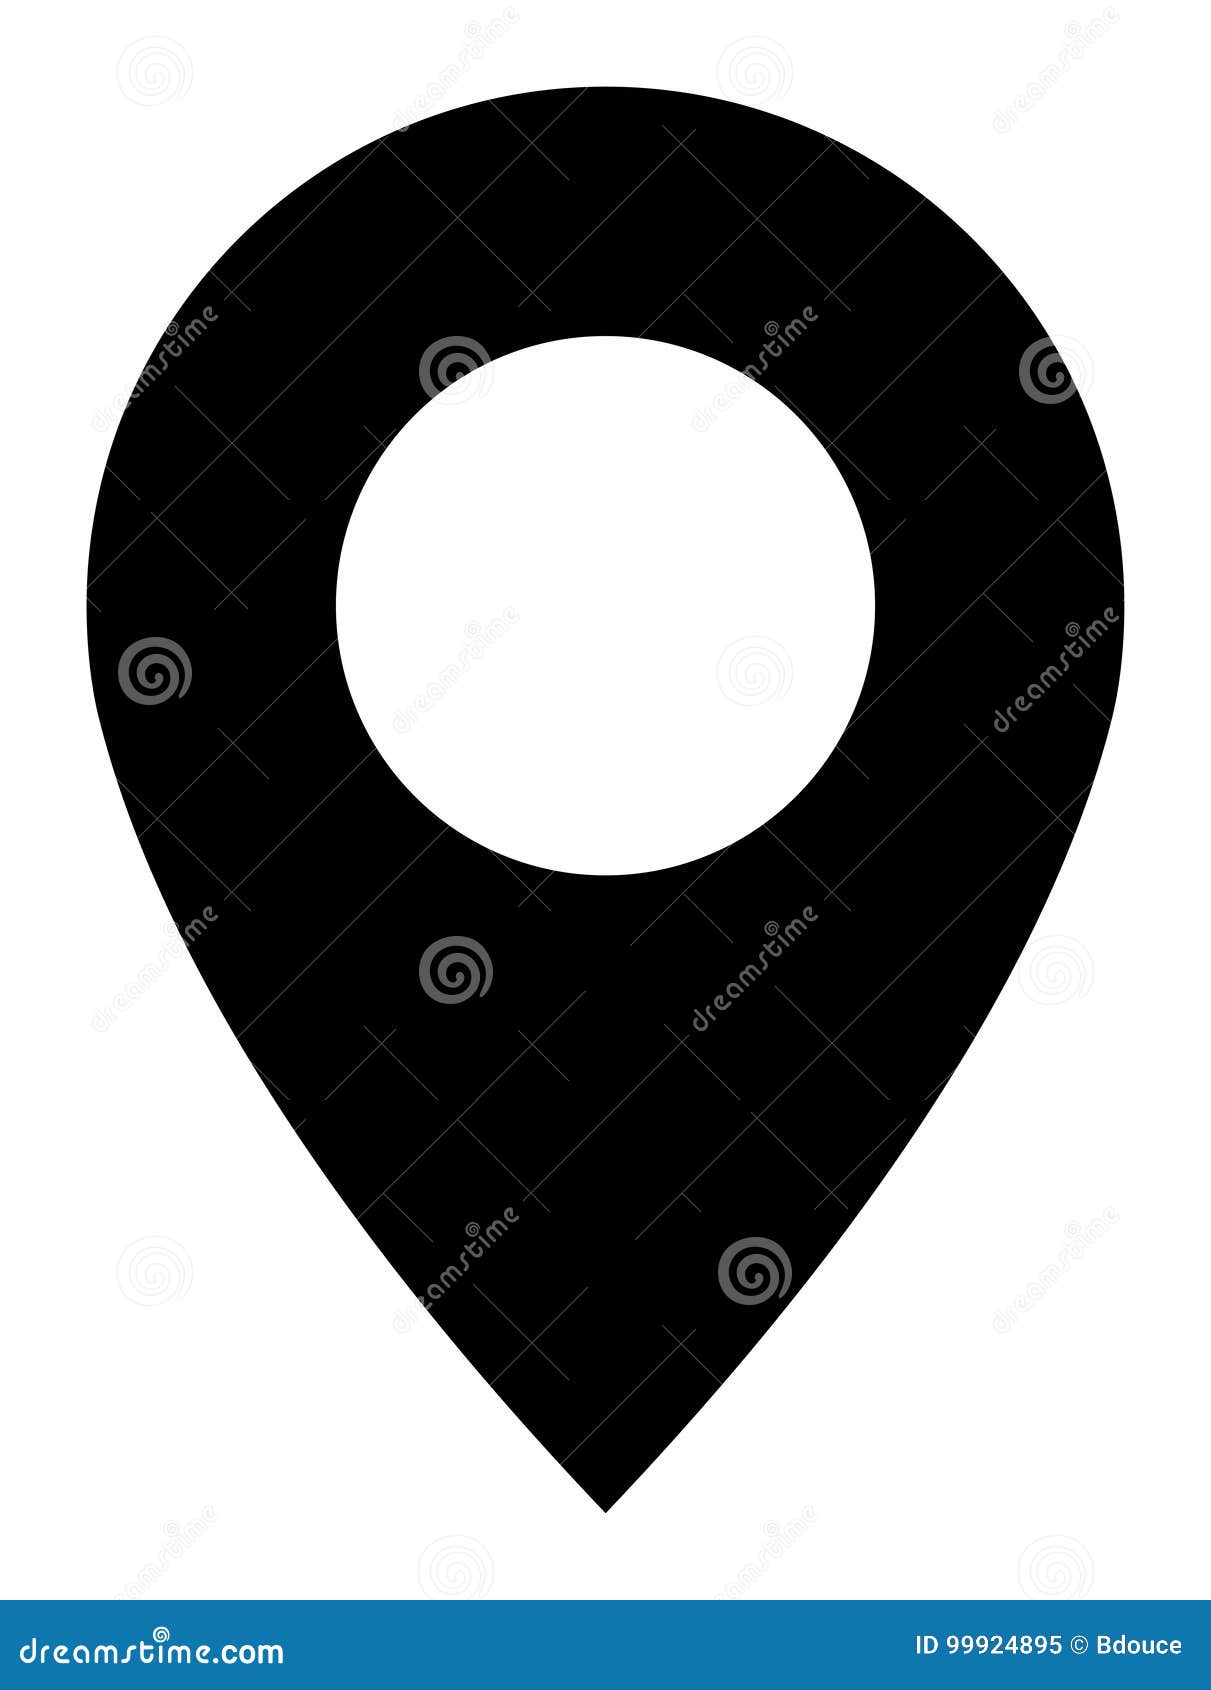  location marker icon